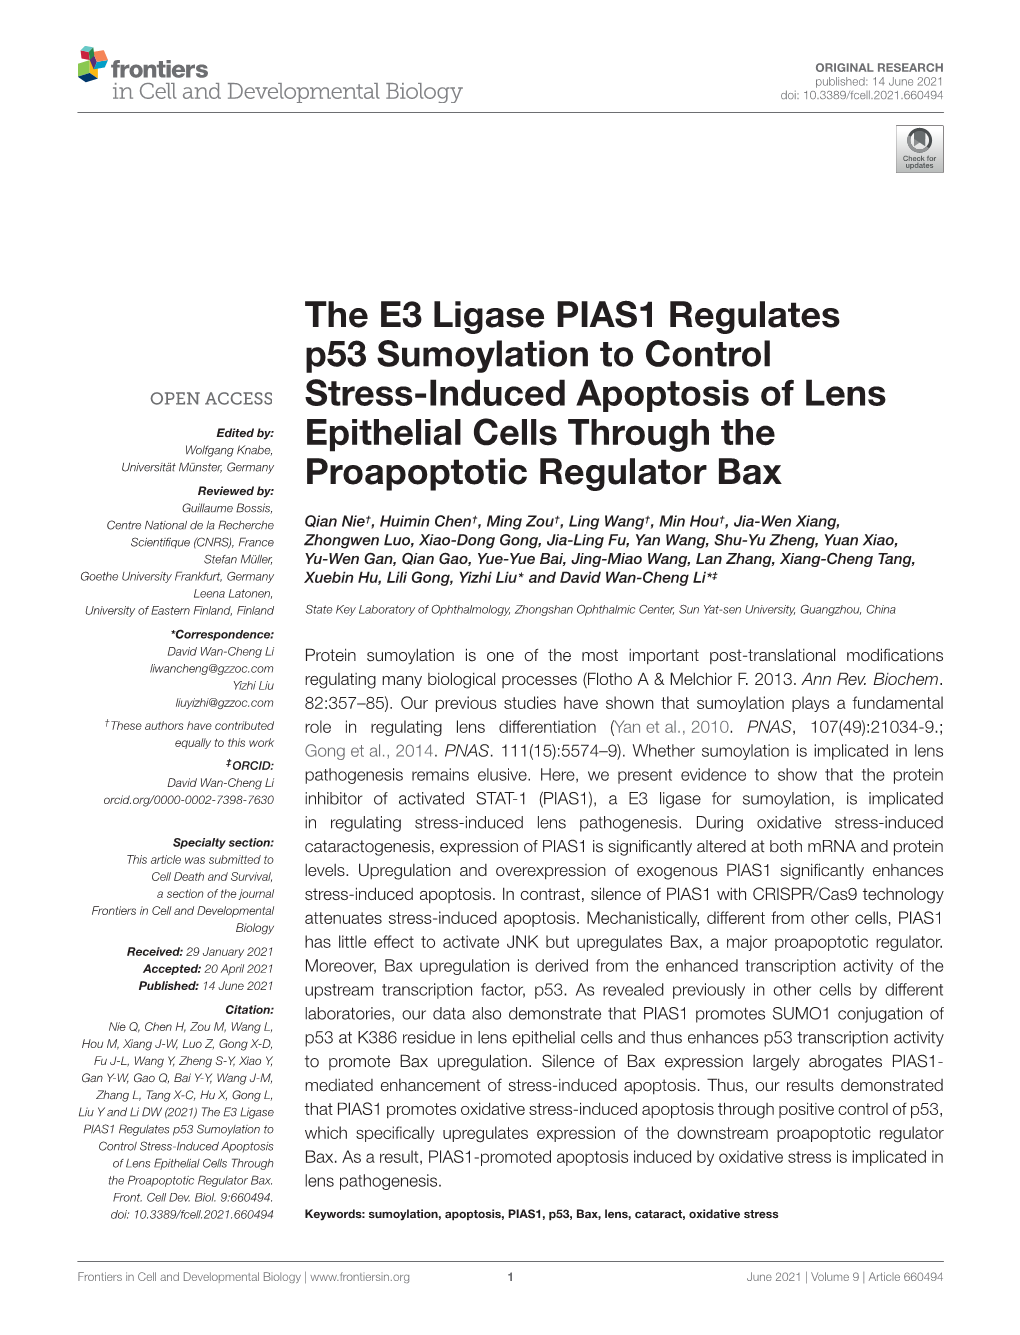 The E3 Ligase PIAS1 Regulates P53 Sumoylation to Control Stress-Induced Apoptosis of Lens